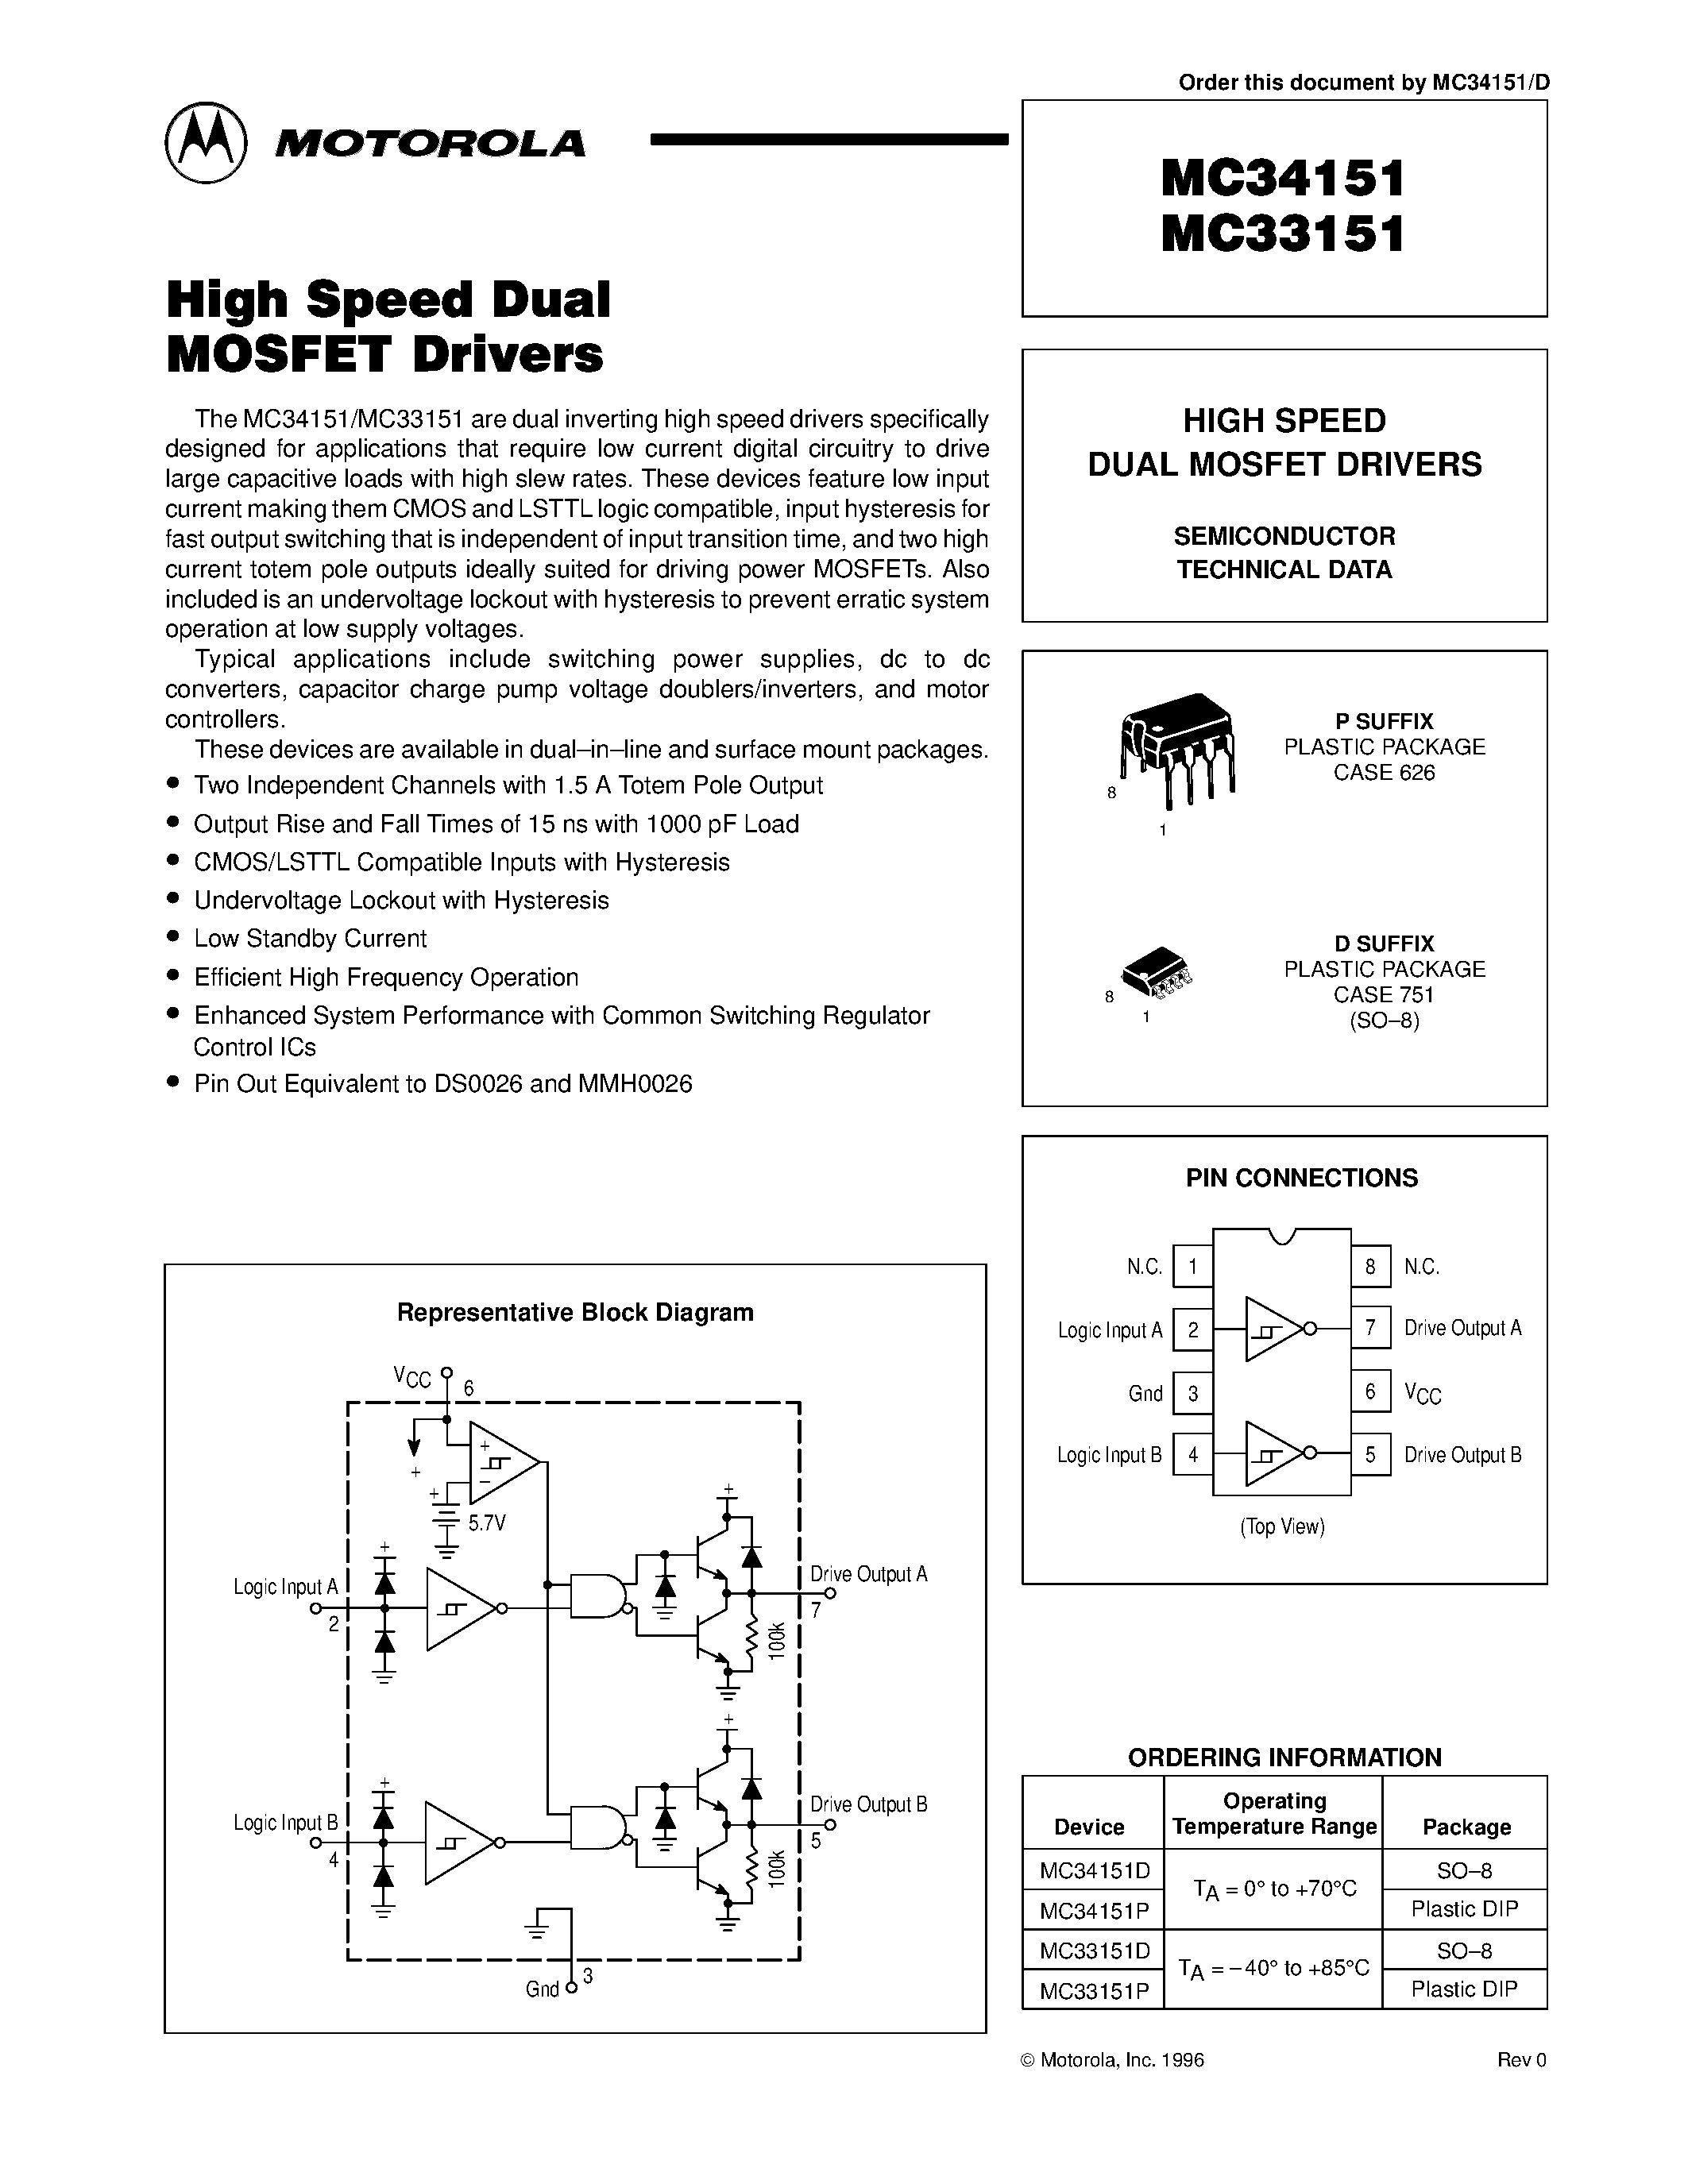 Даташит MC33151 - (MC34151 / MC33151) HIGH SPEED DUAL MOSFET DRIVERS страница 1